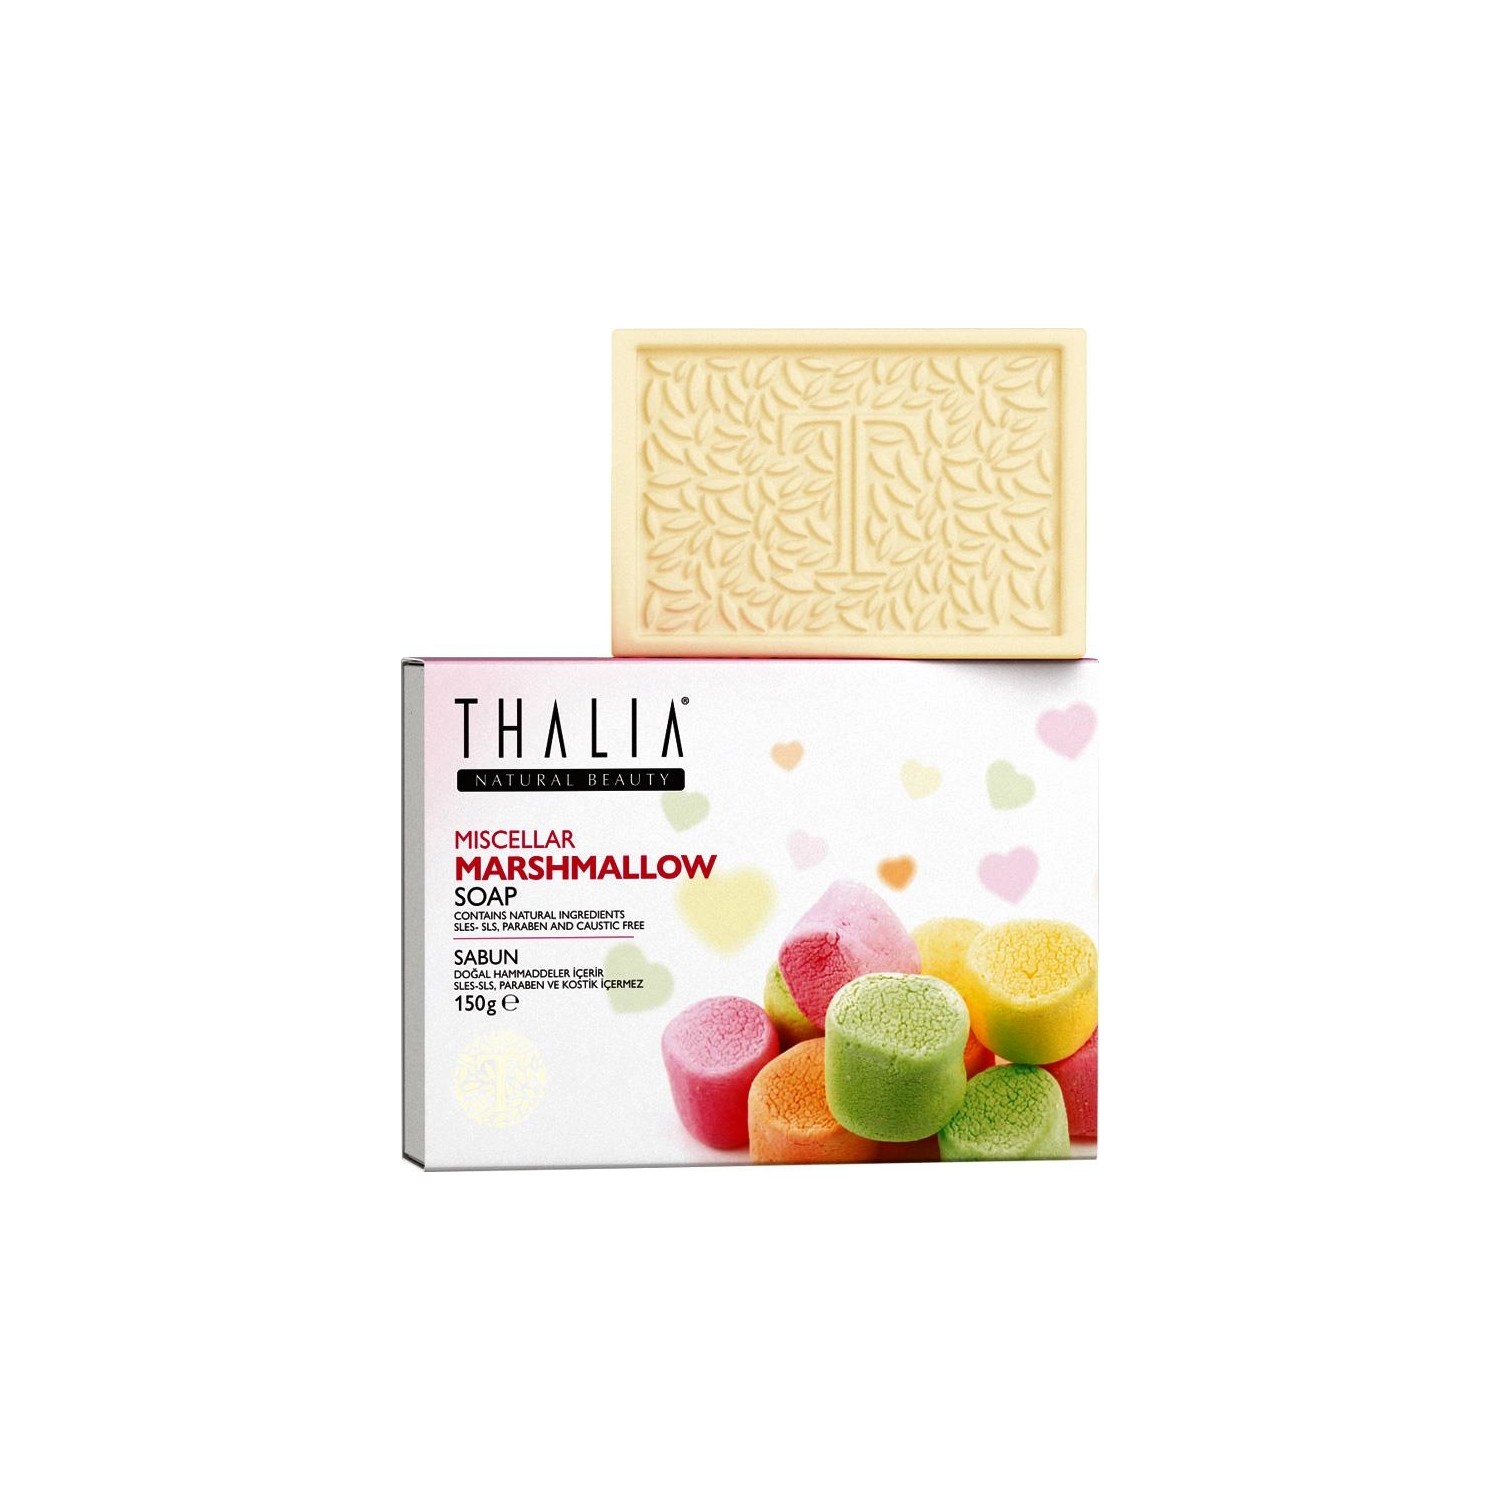 Натуральное твердое мыло Thalia & Miselar Marshmallow, 2 x 75 гр